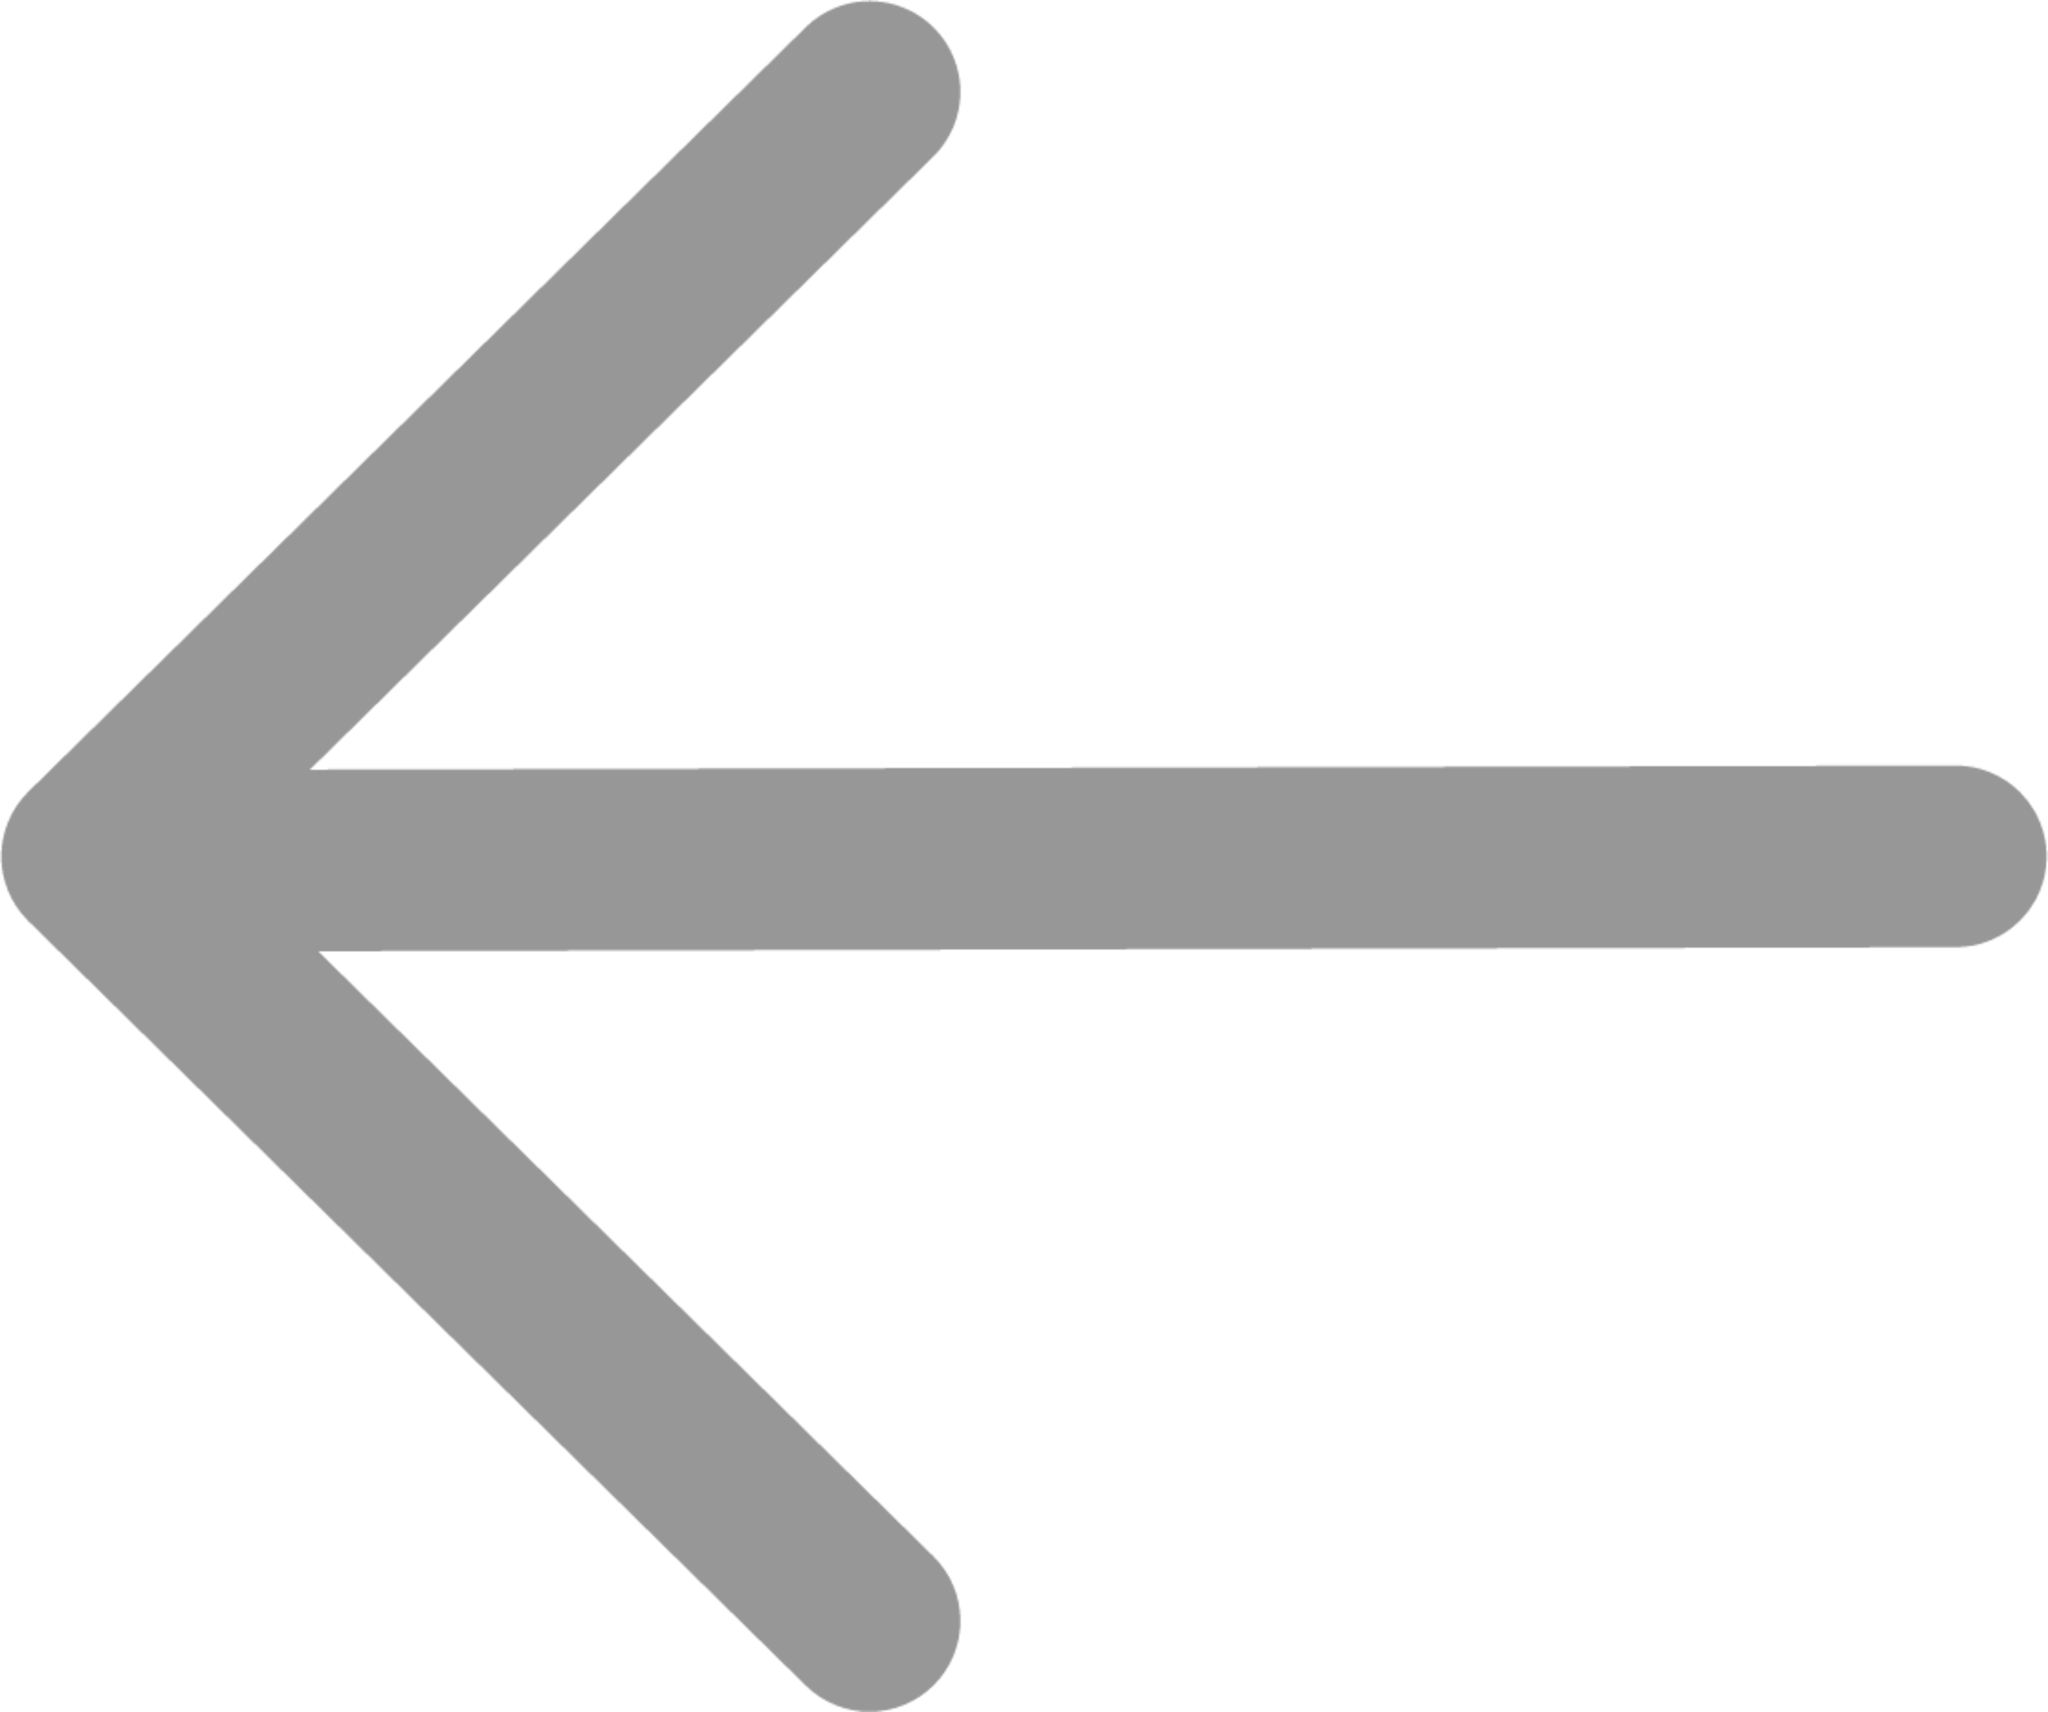 arrowLeft icon